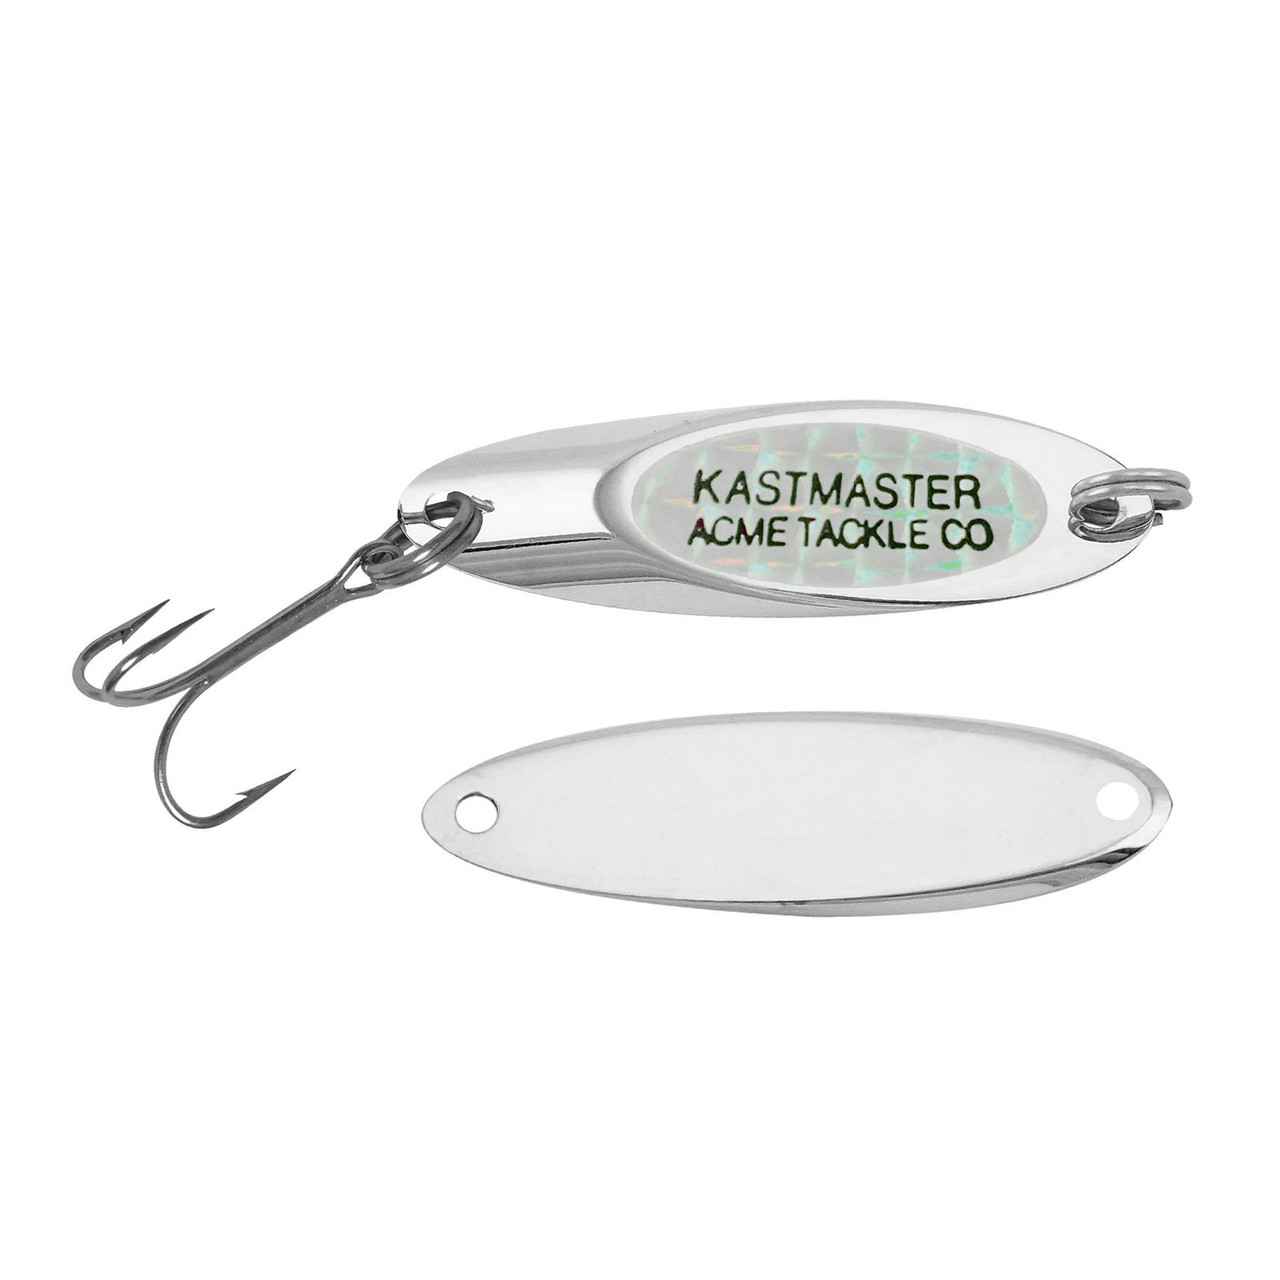 ACME Tackle Kastmaster - Rattle Master-1/4 oz.